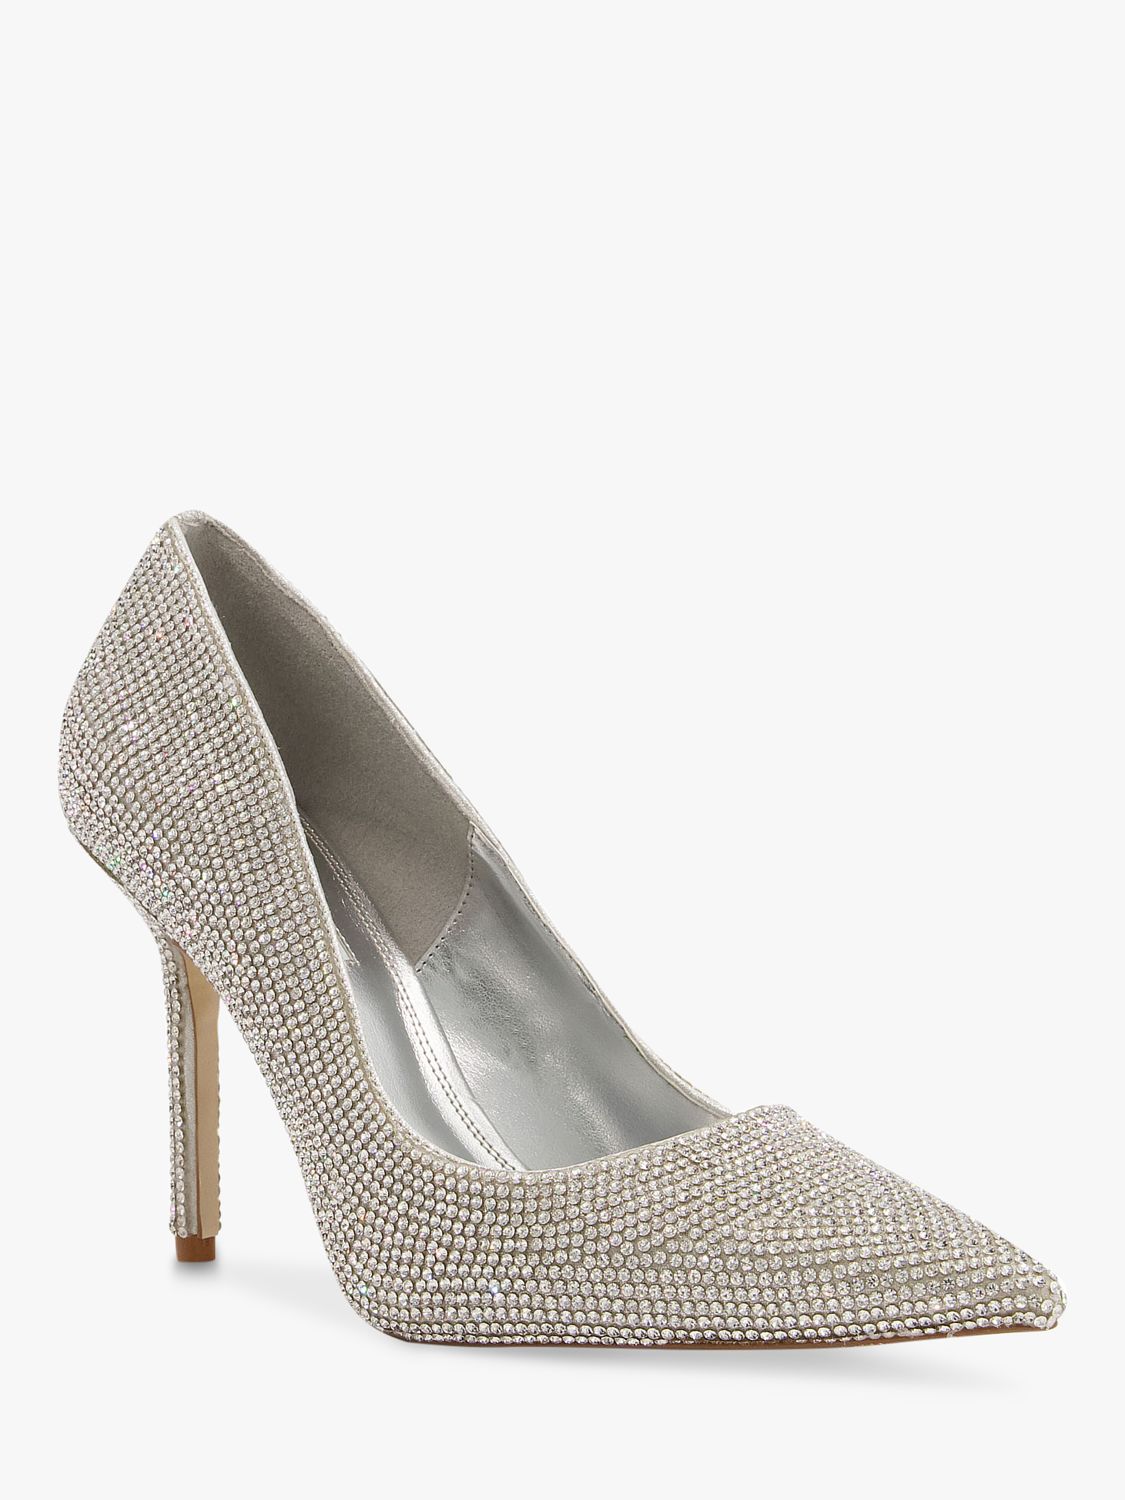 Dune Bejewel Diamante Court Shoes, Silver at John Lewis & Partners